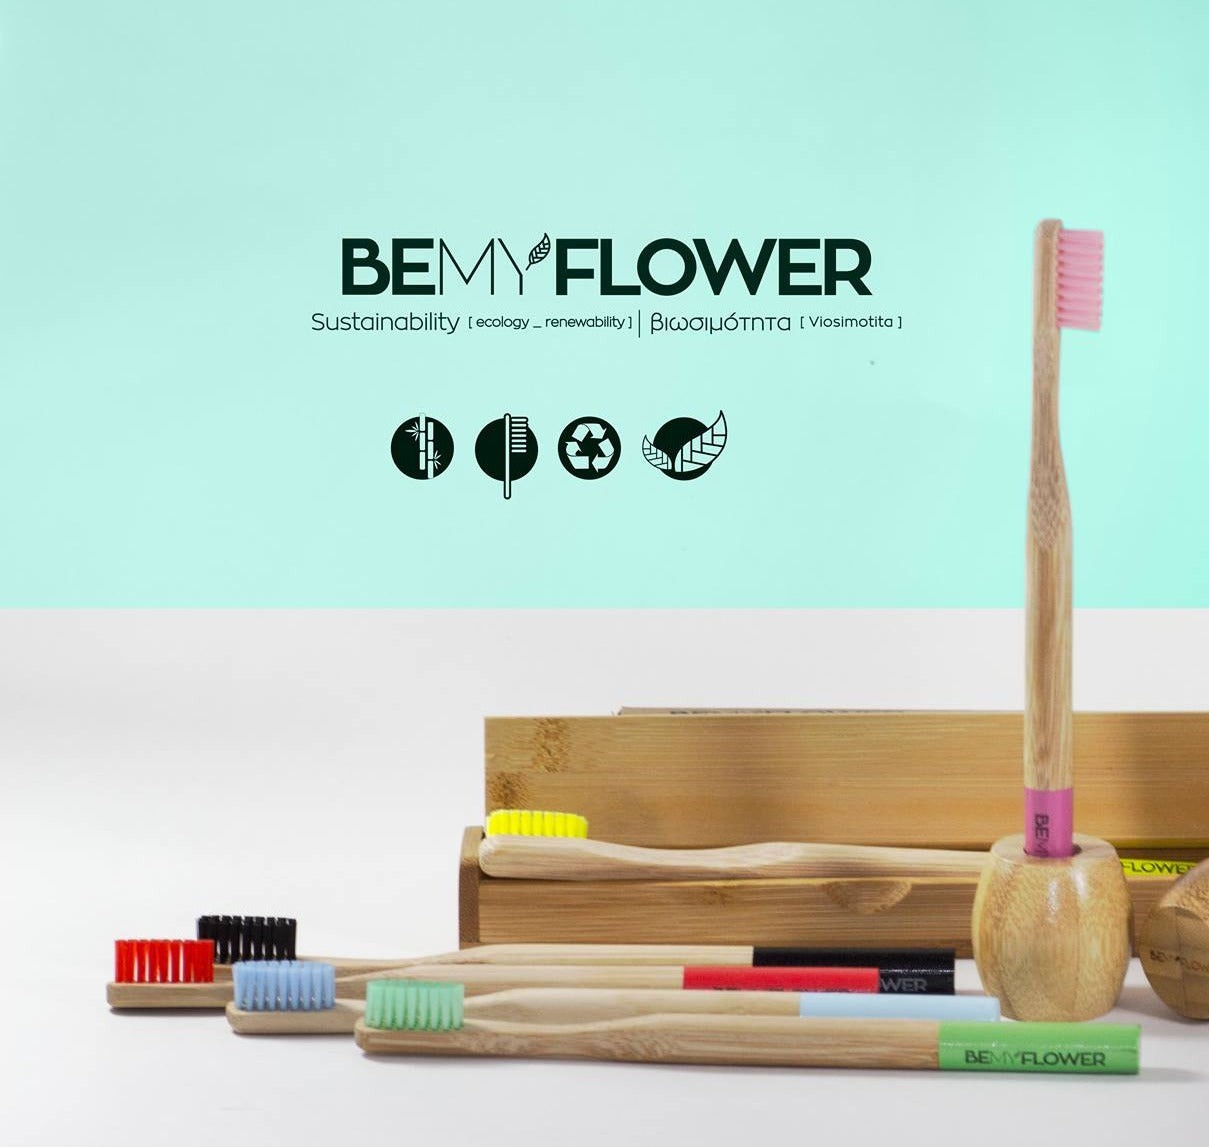 "BeMyFlower" Bamboo Toothbrushes